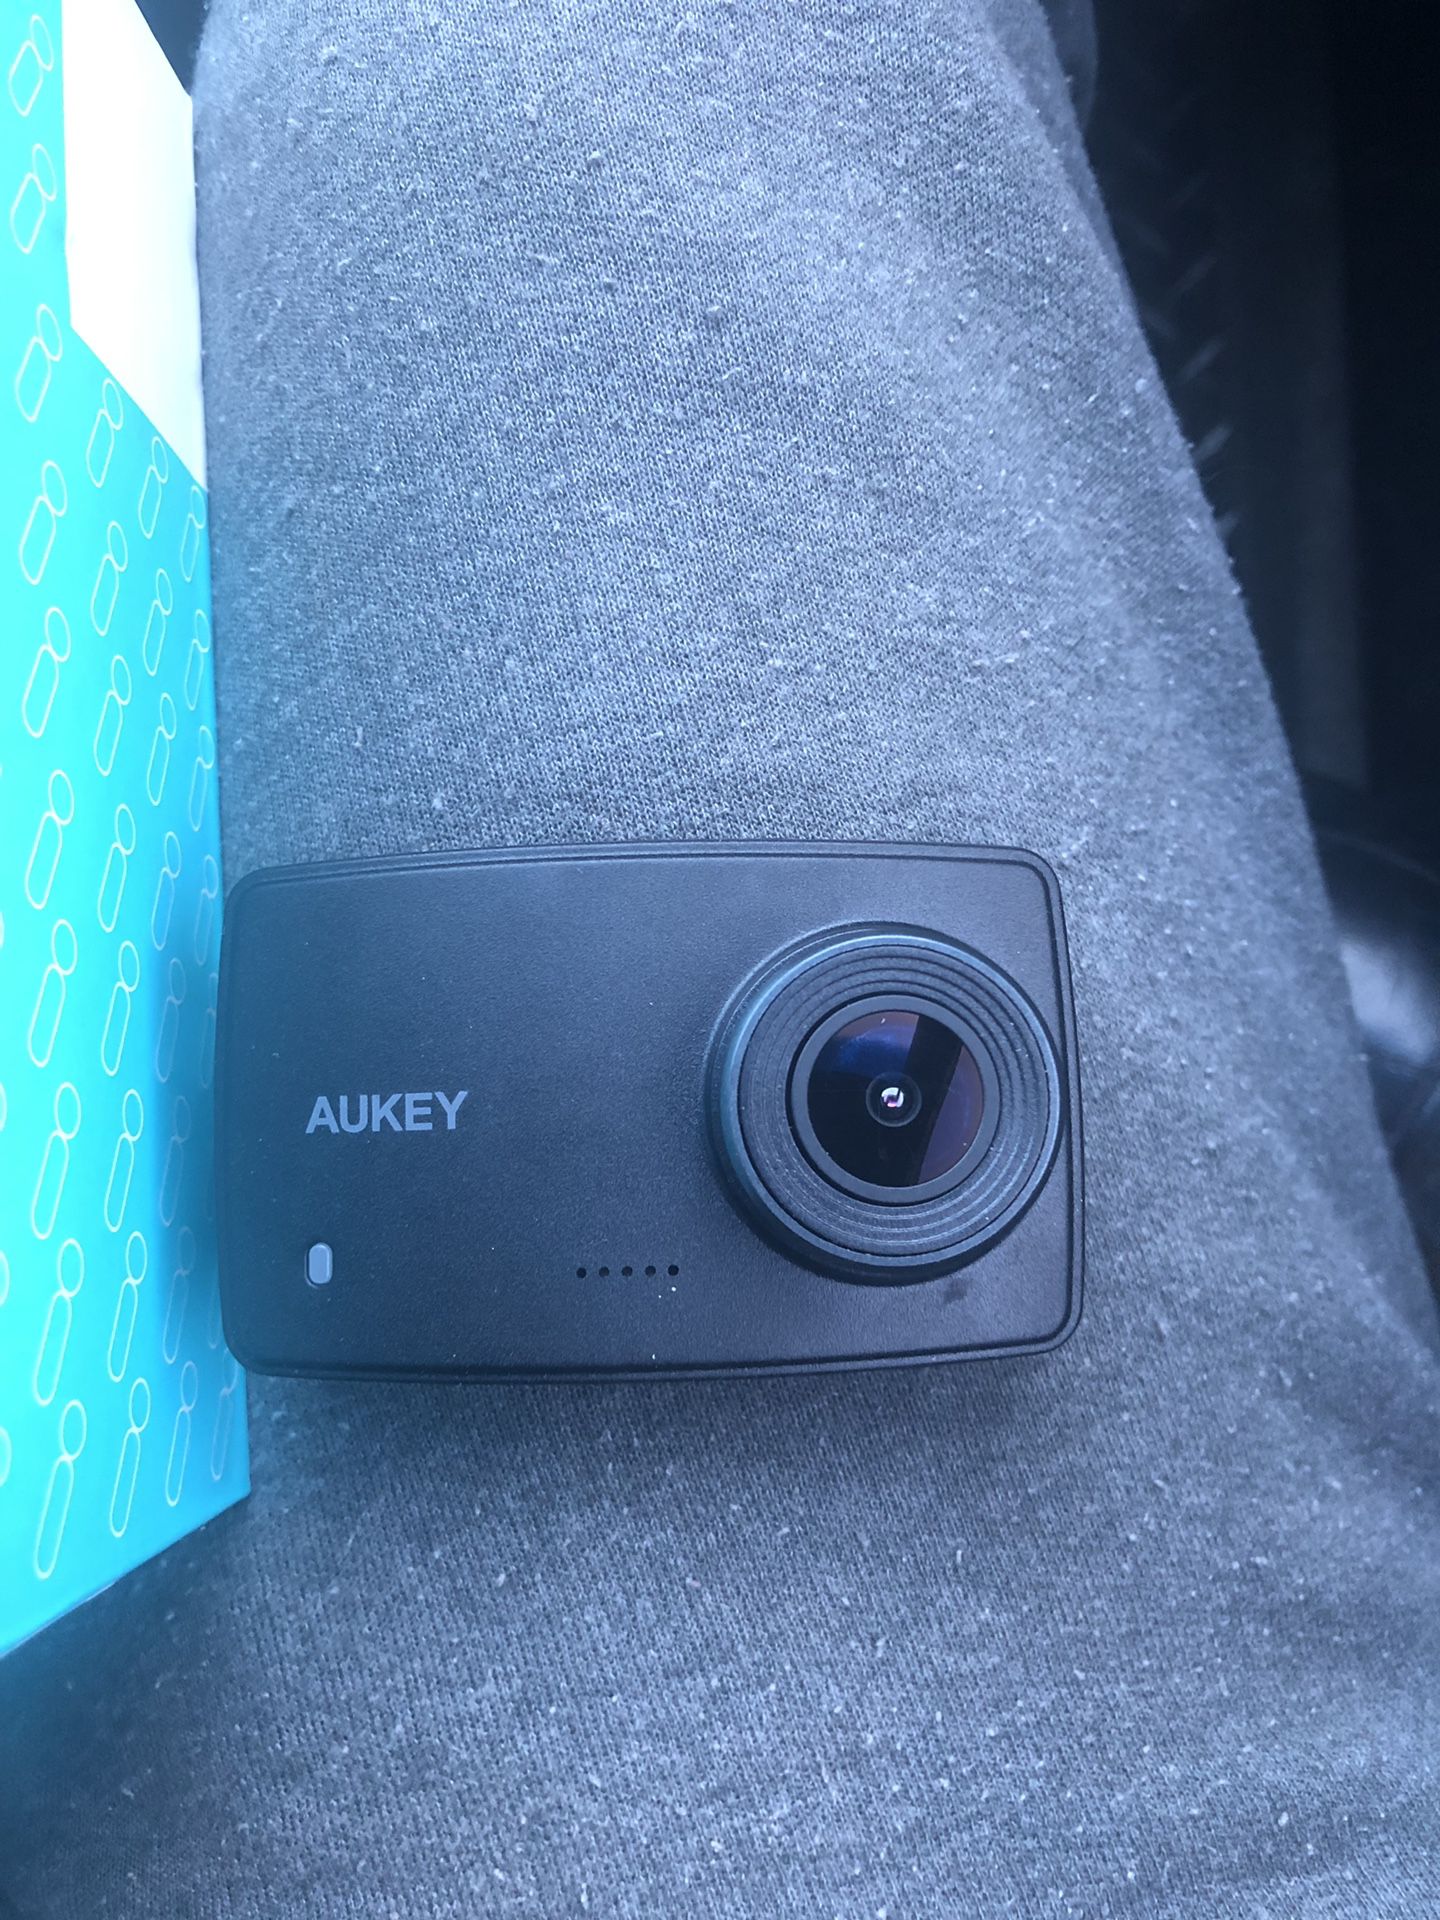 Brand new car camera